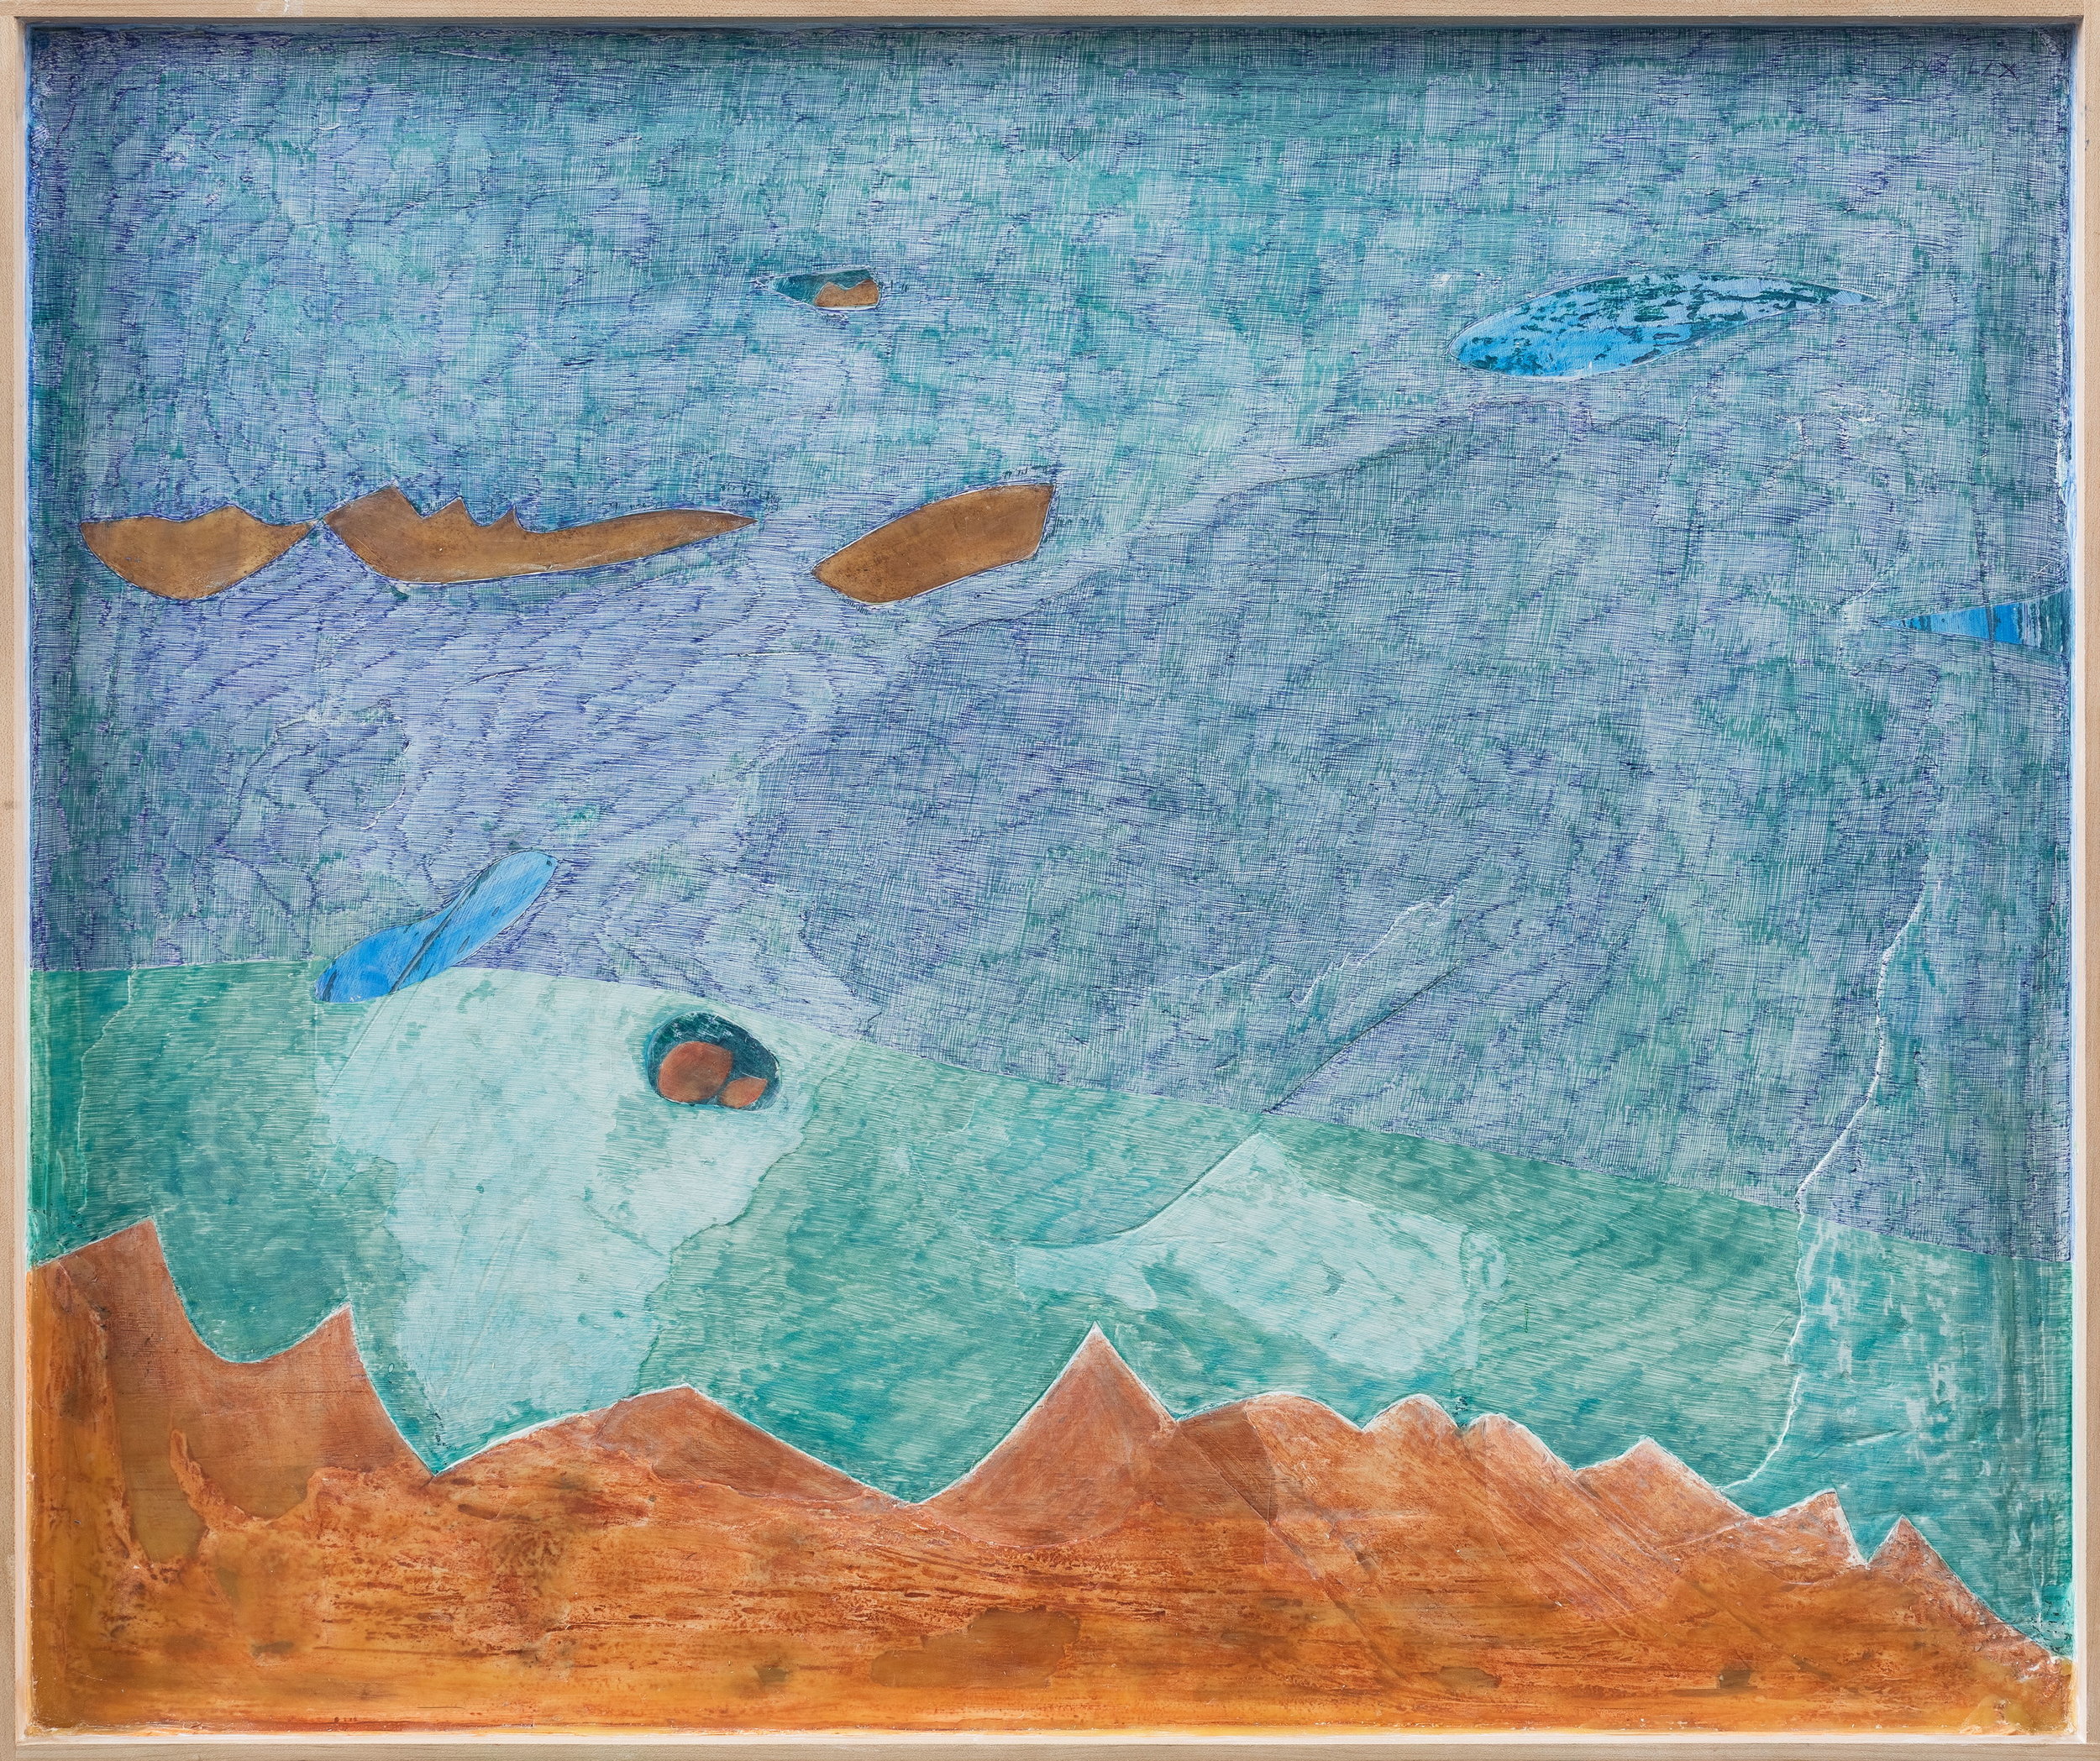  Lan Zhaoxing,  The Ocean , 2018. Plaster, beeswax, acrylic, watercolor, ballpoint pen, 19.6 x 23.6 inch © Lan Zhaoxing, courtesy Fou Gallery 